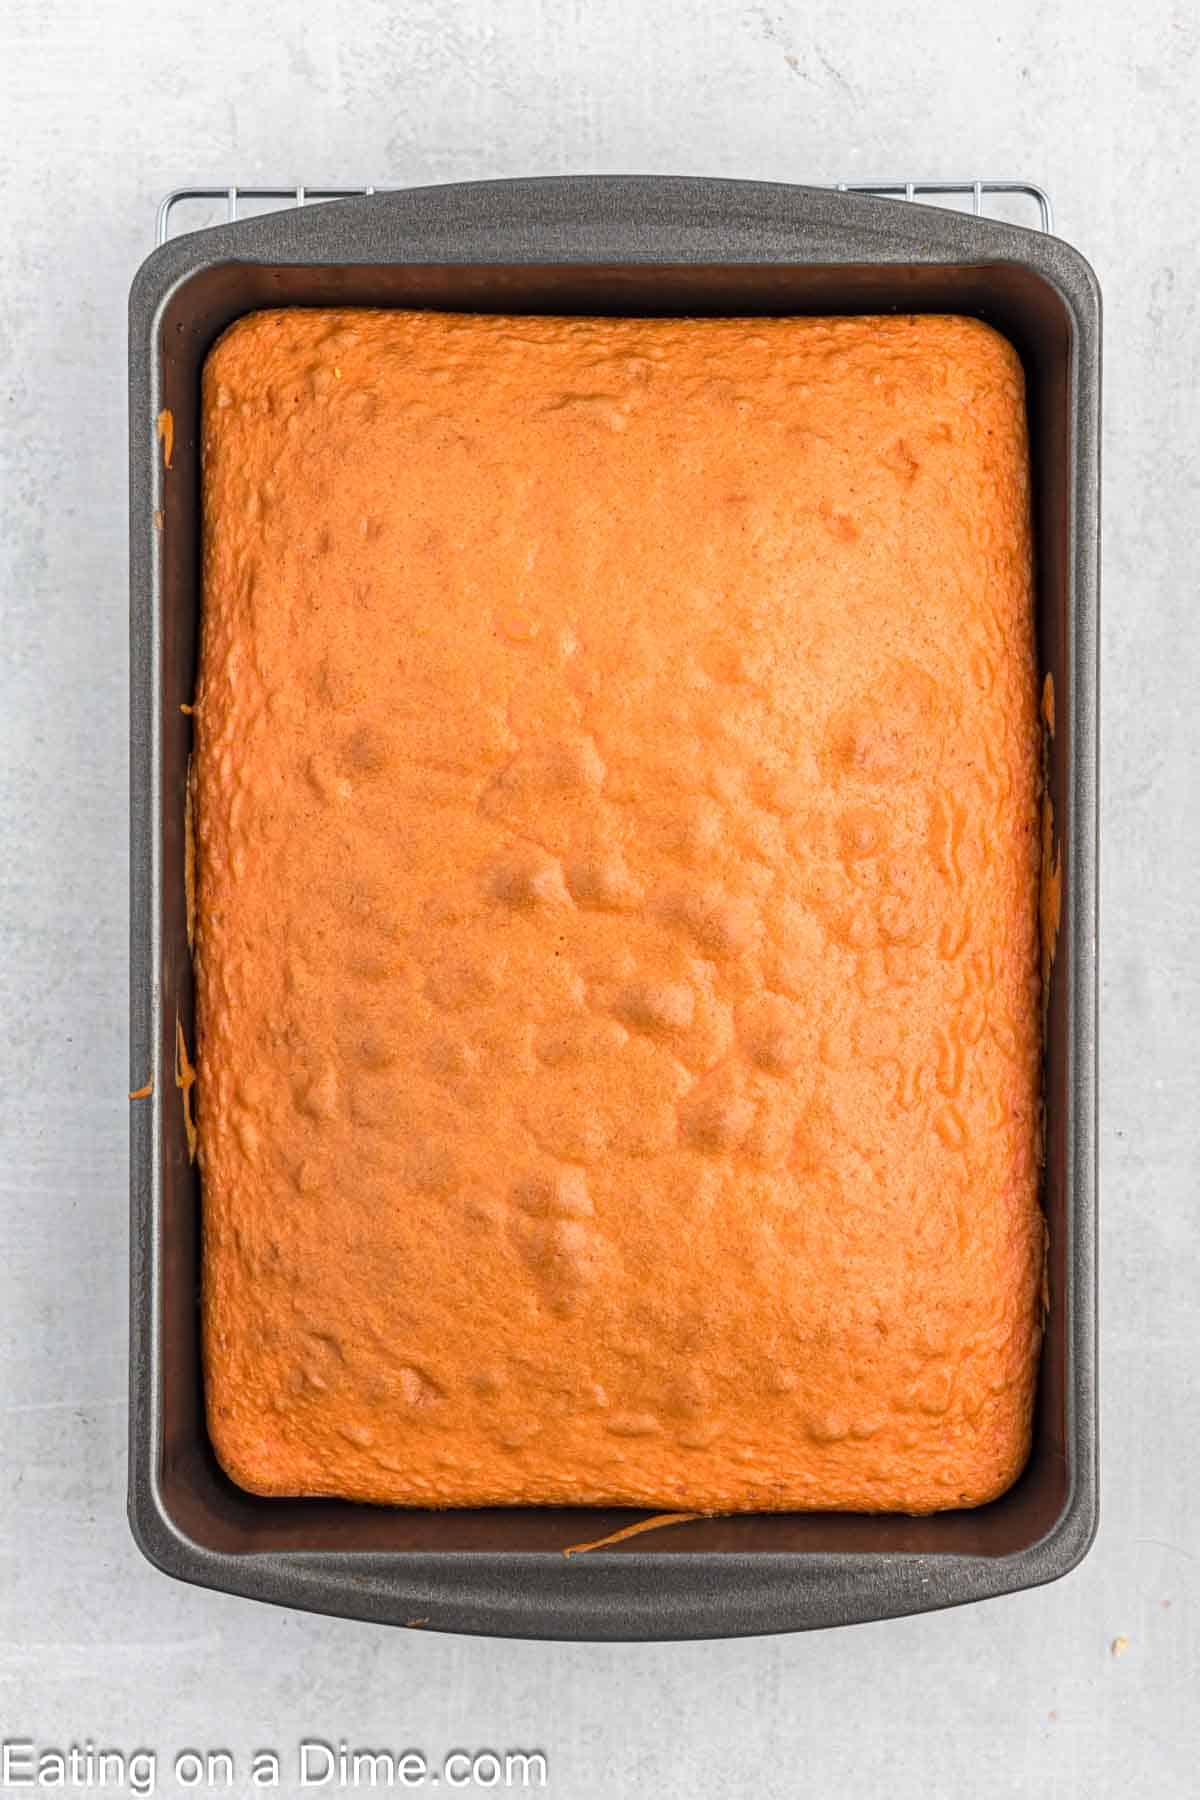 Baked cake in a baking pan